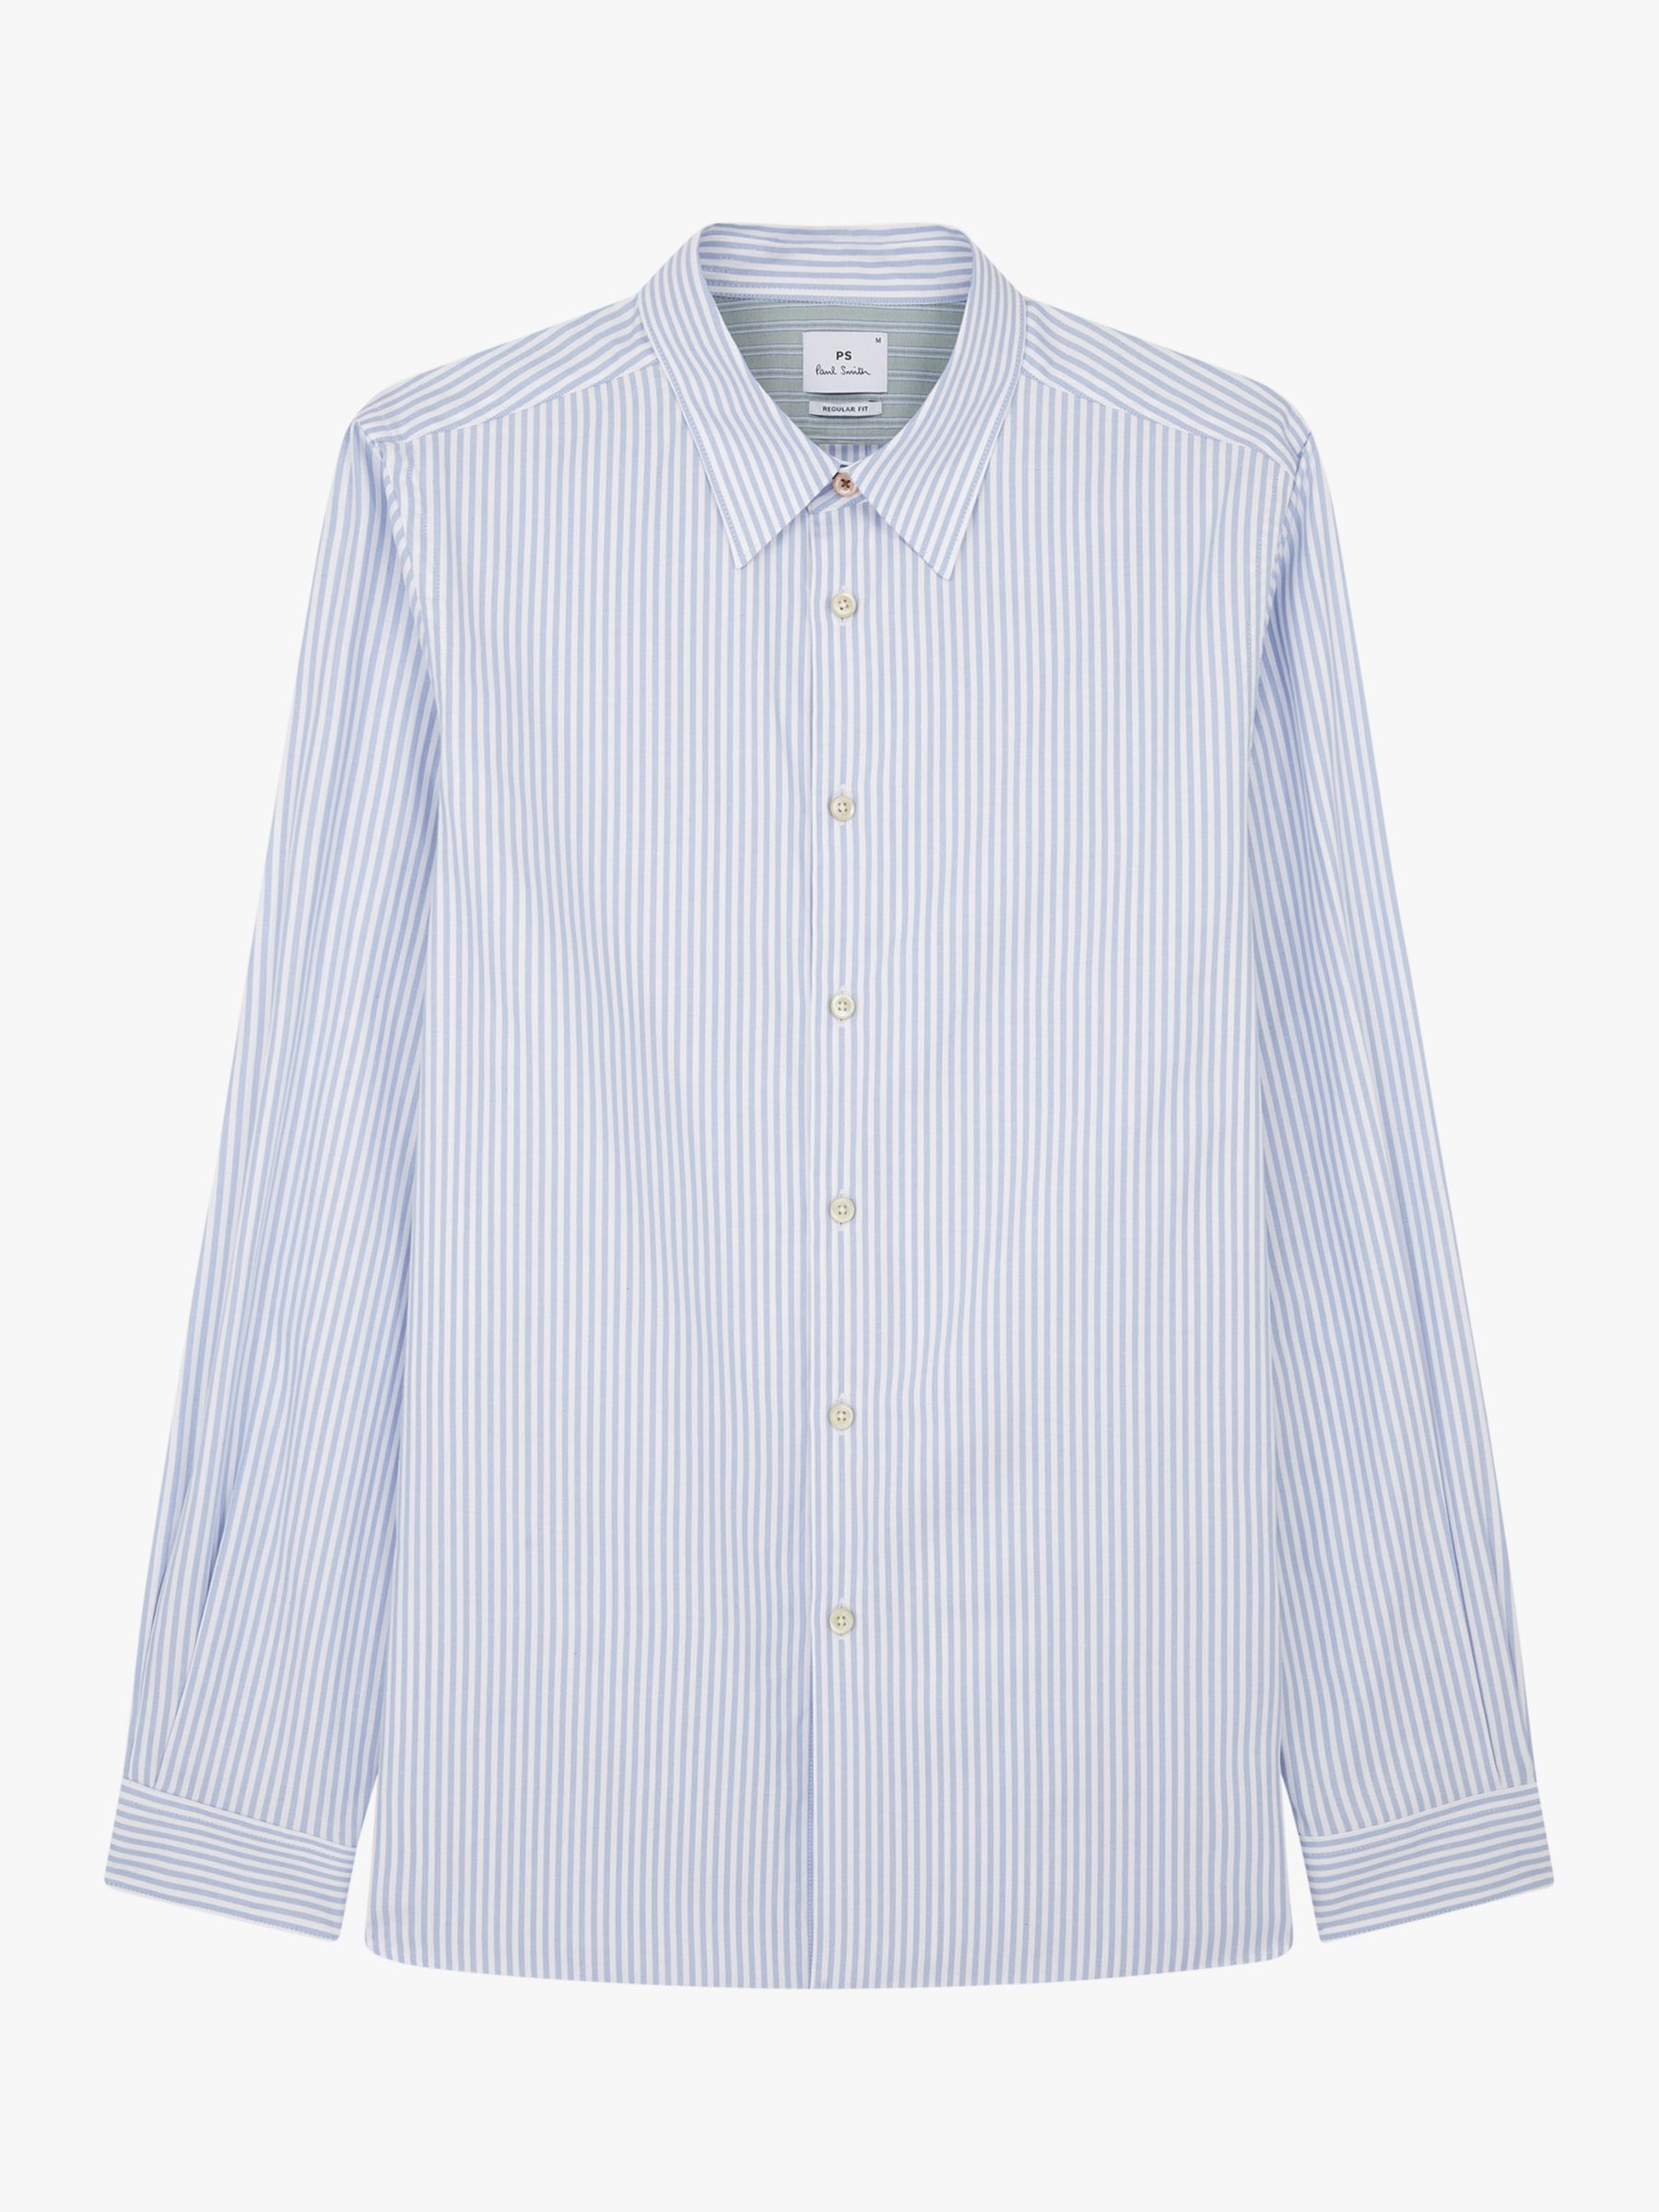 Paul Smith Long Sleeve Regular Stripe Shirt, Blue, M